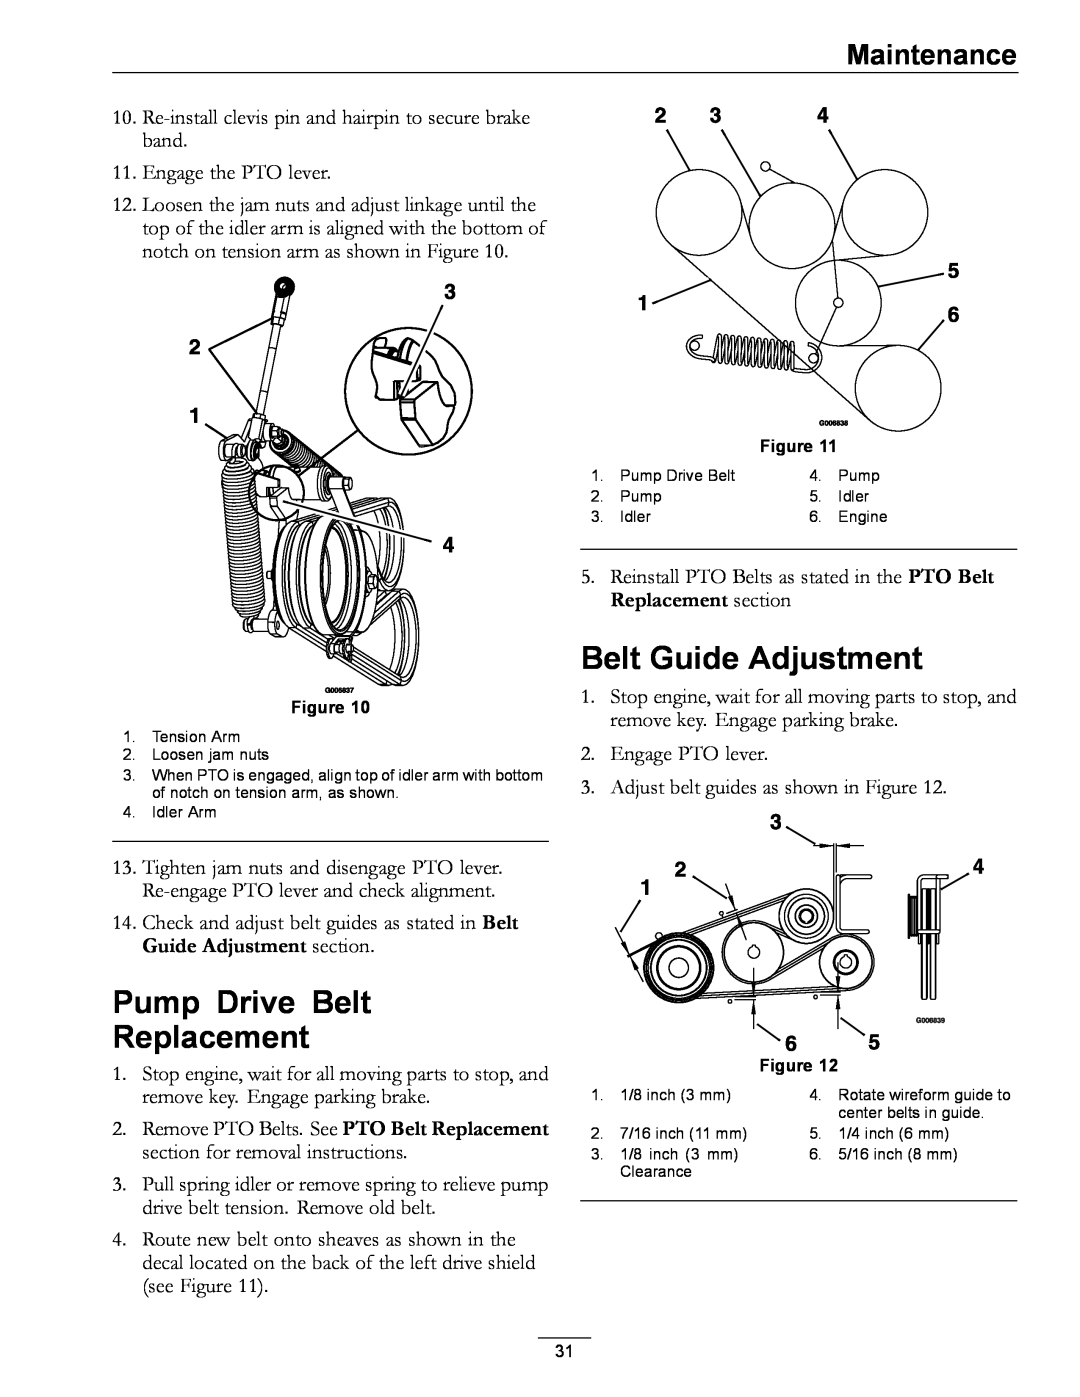 Exmark 850 manual Pump Drive Belt Replacement, Belt Guide Adjustment, Maintenance 